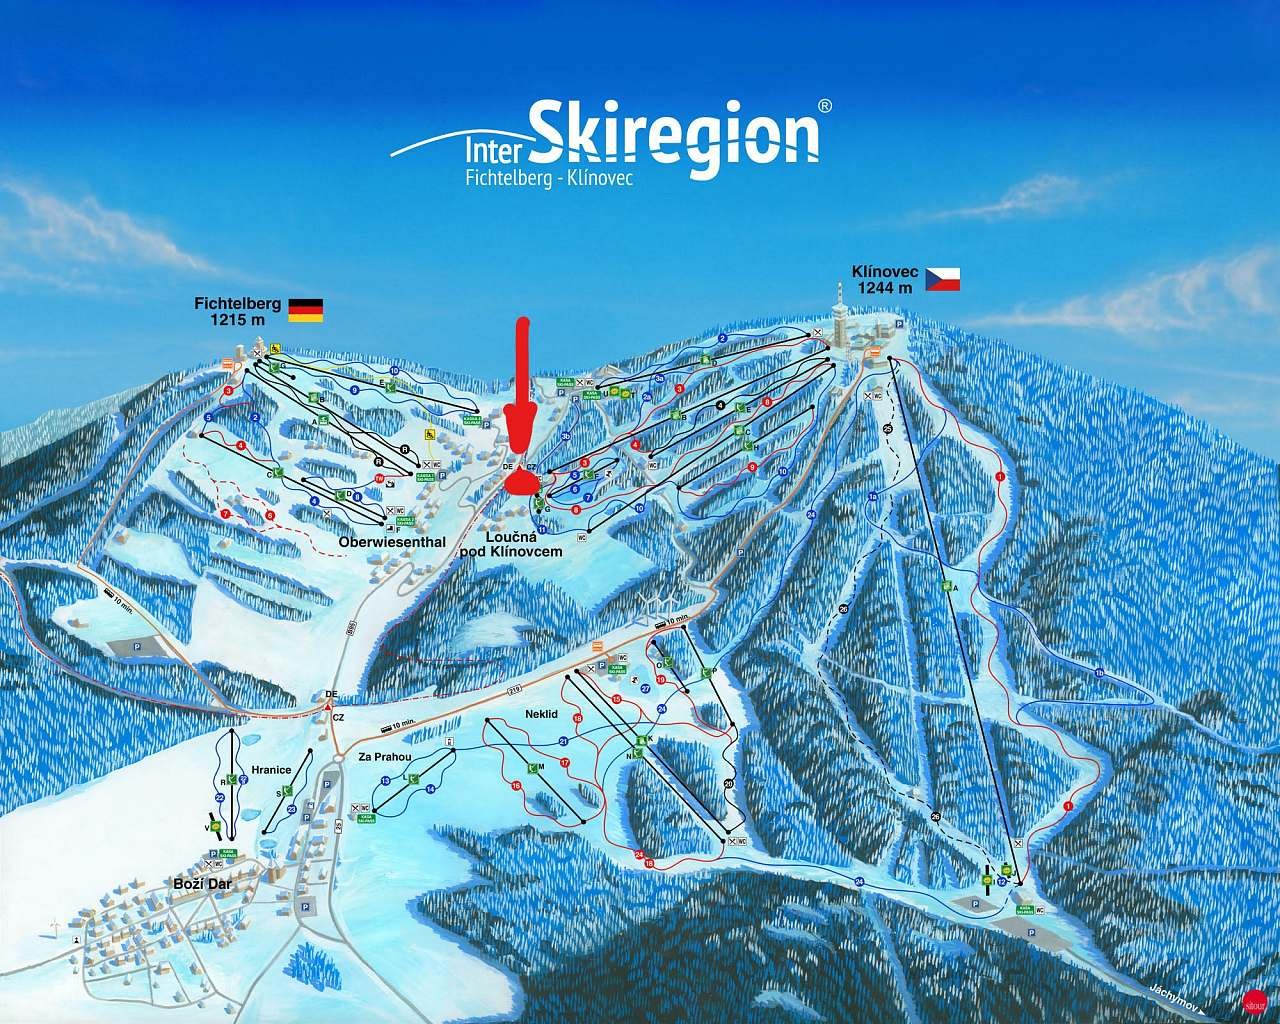 Mapa skiareál Klínovec